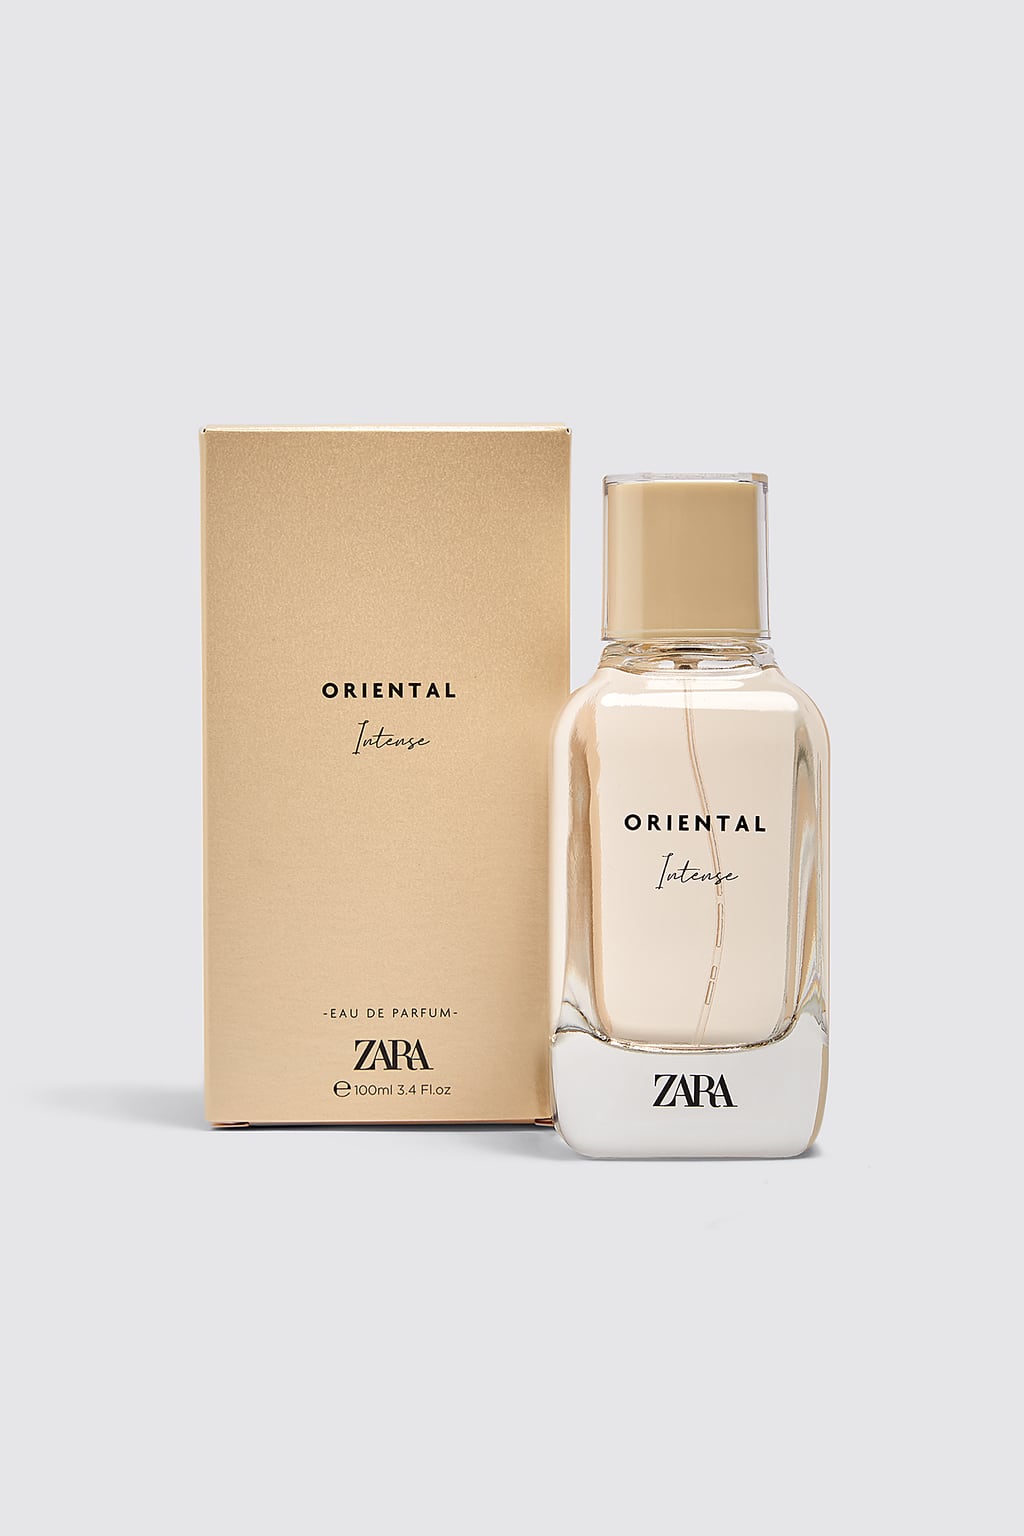 Oriental Intense Zara perfume - a new 